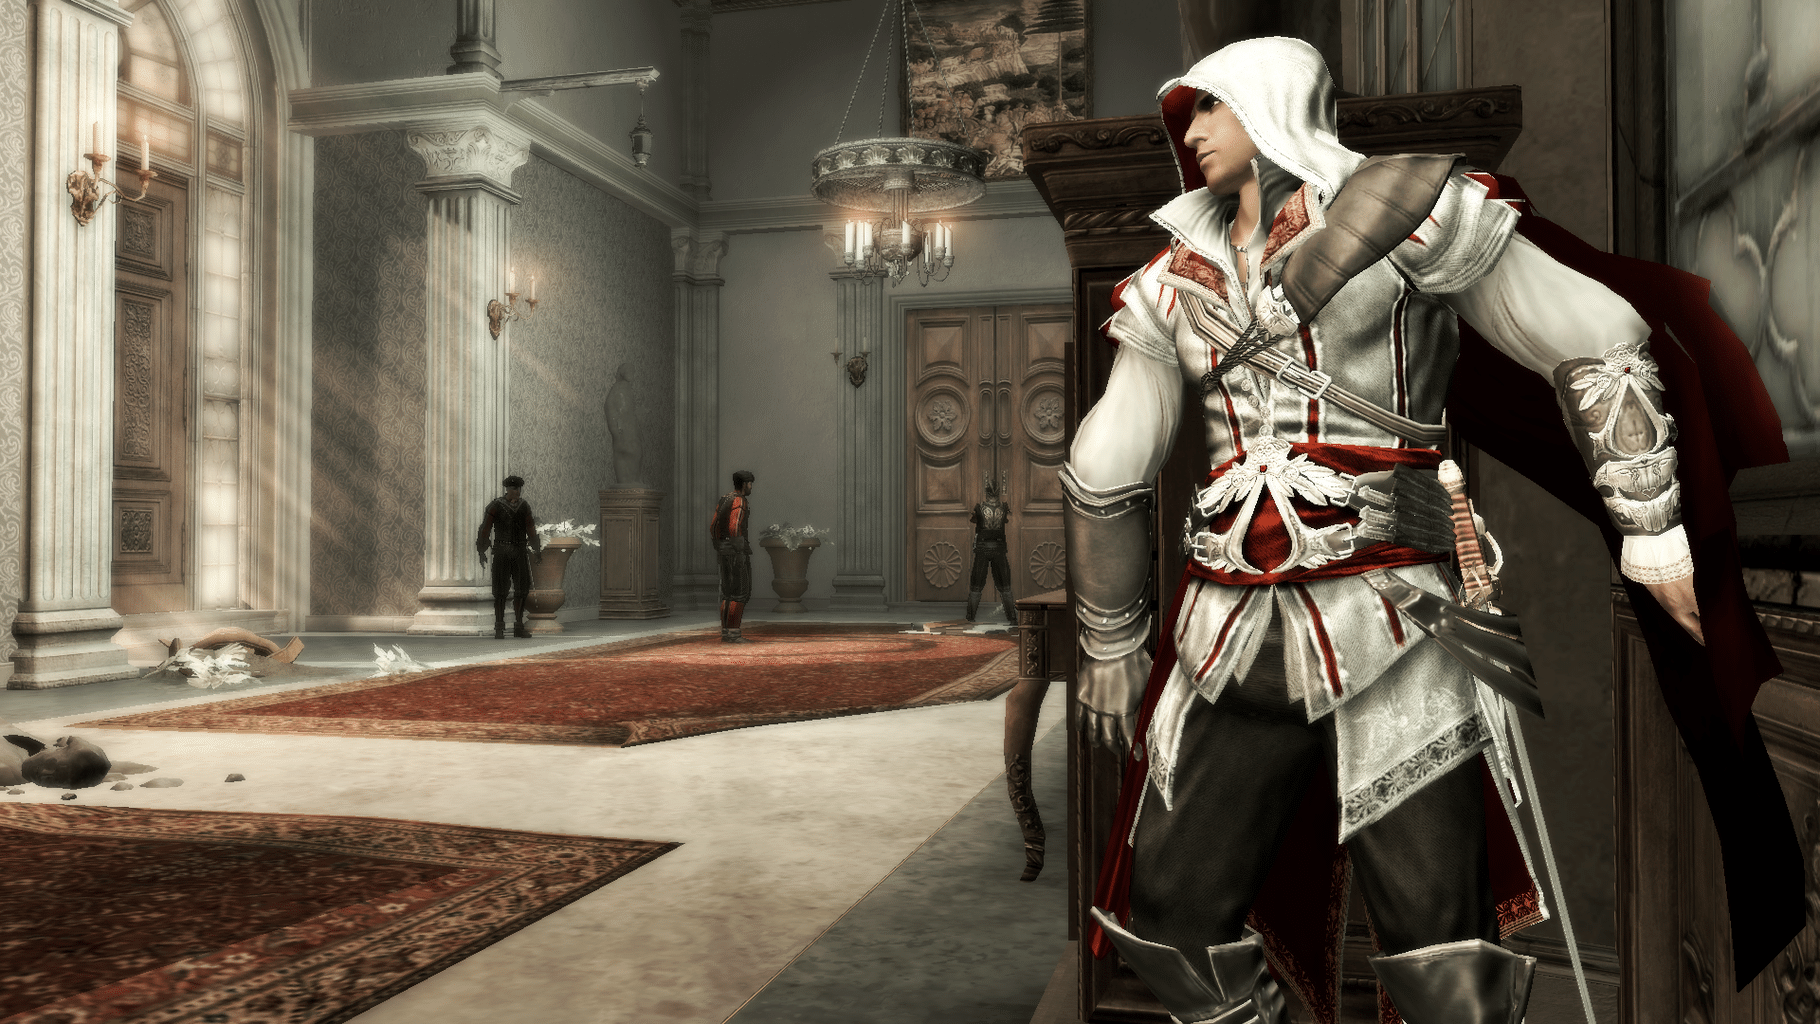 Pega essa Análise! Assassin's Creed III Remastered 